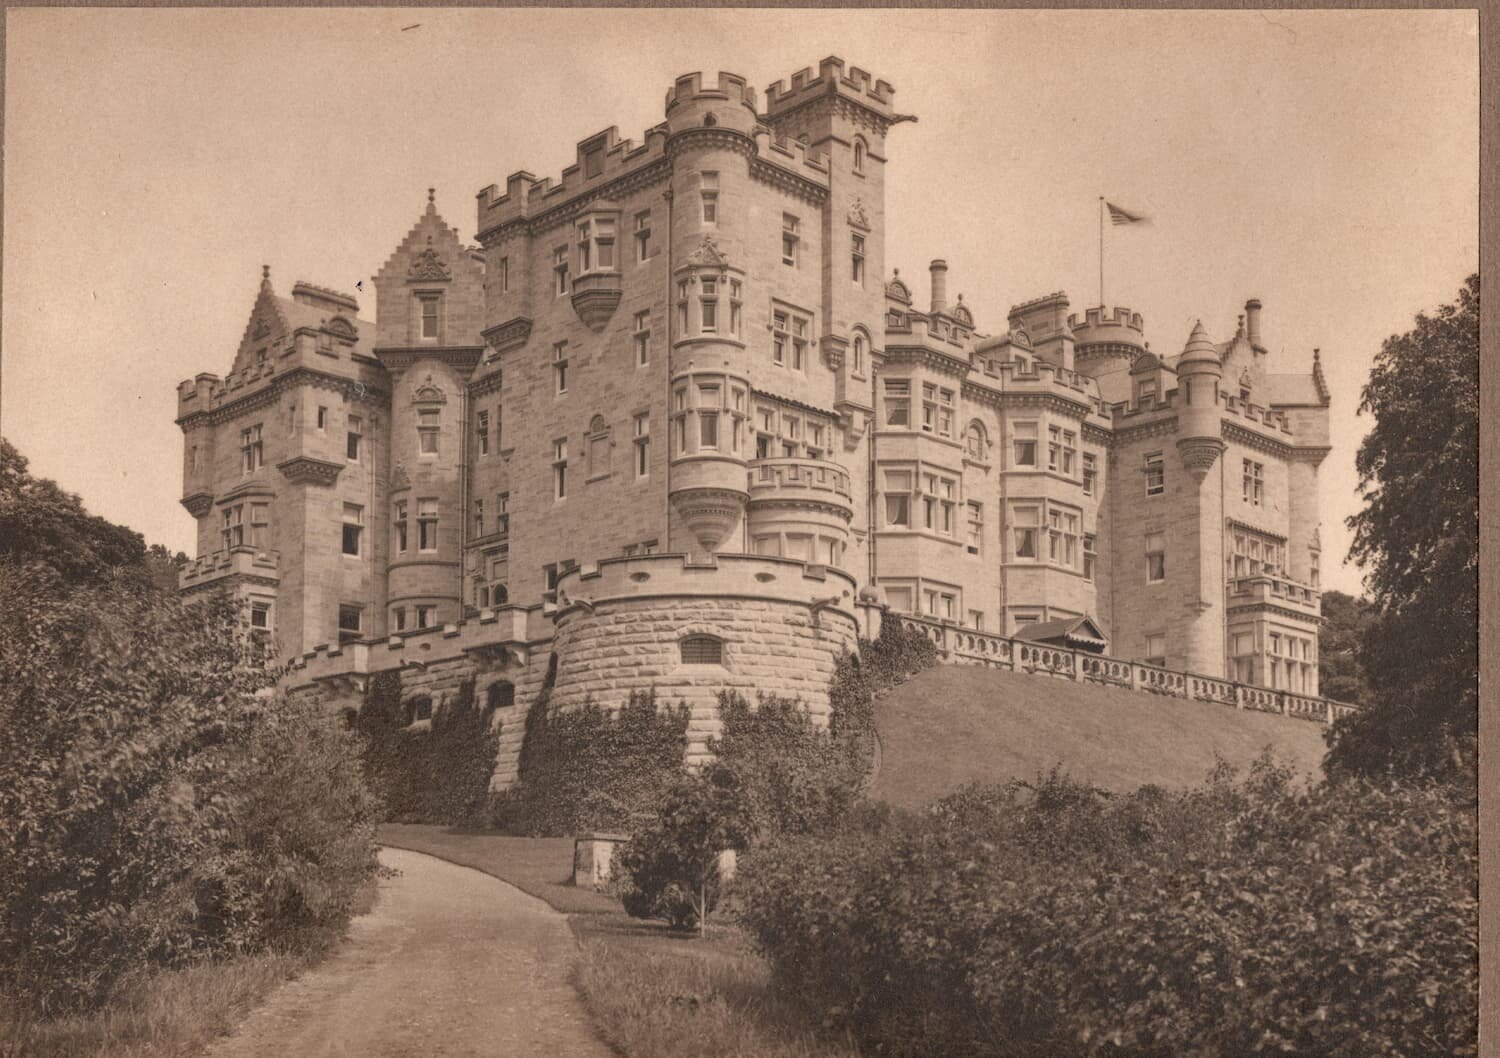  Skibo Castle, Andrew Carnegie’s Scottish home near Dornoch.  